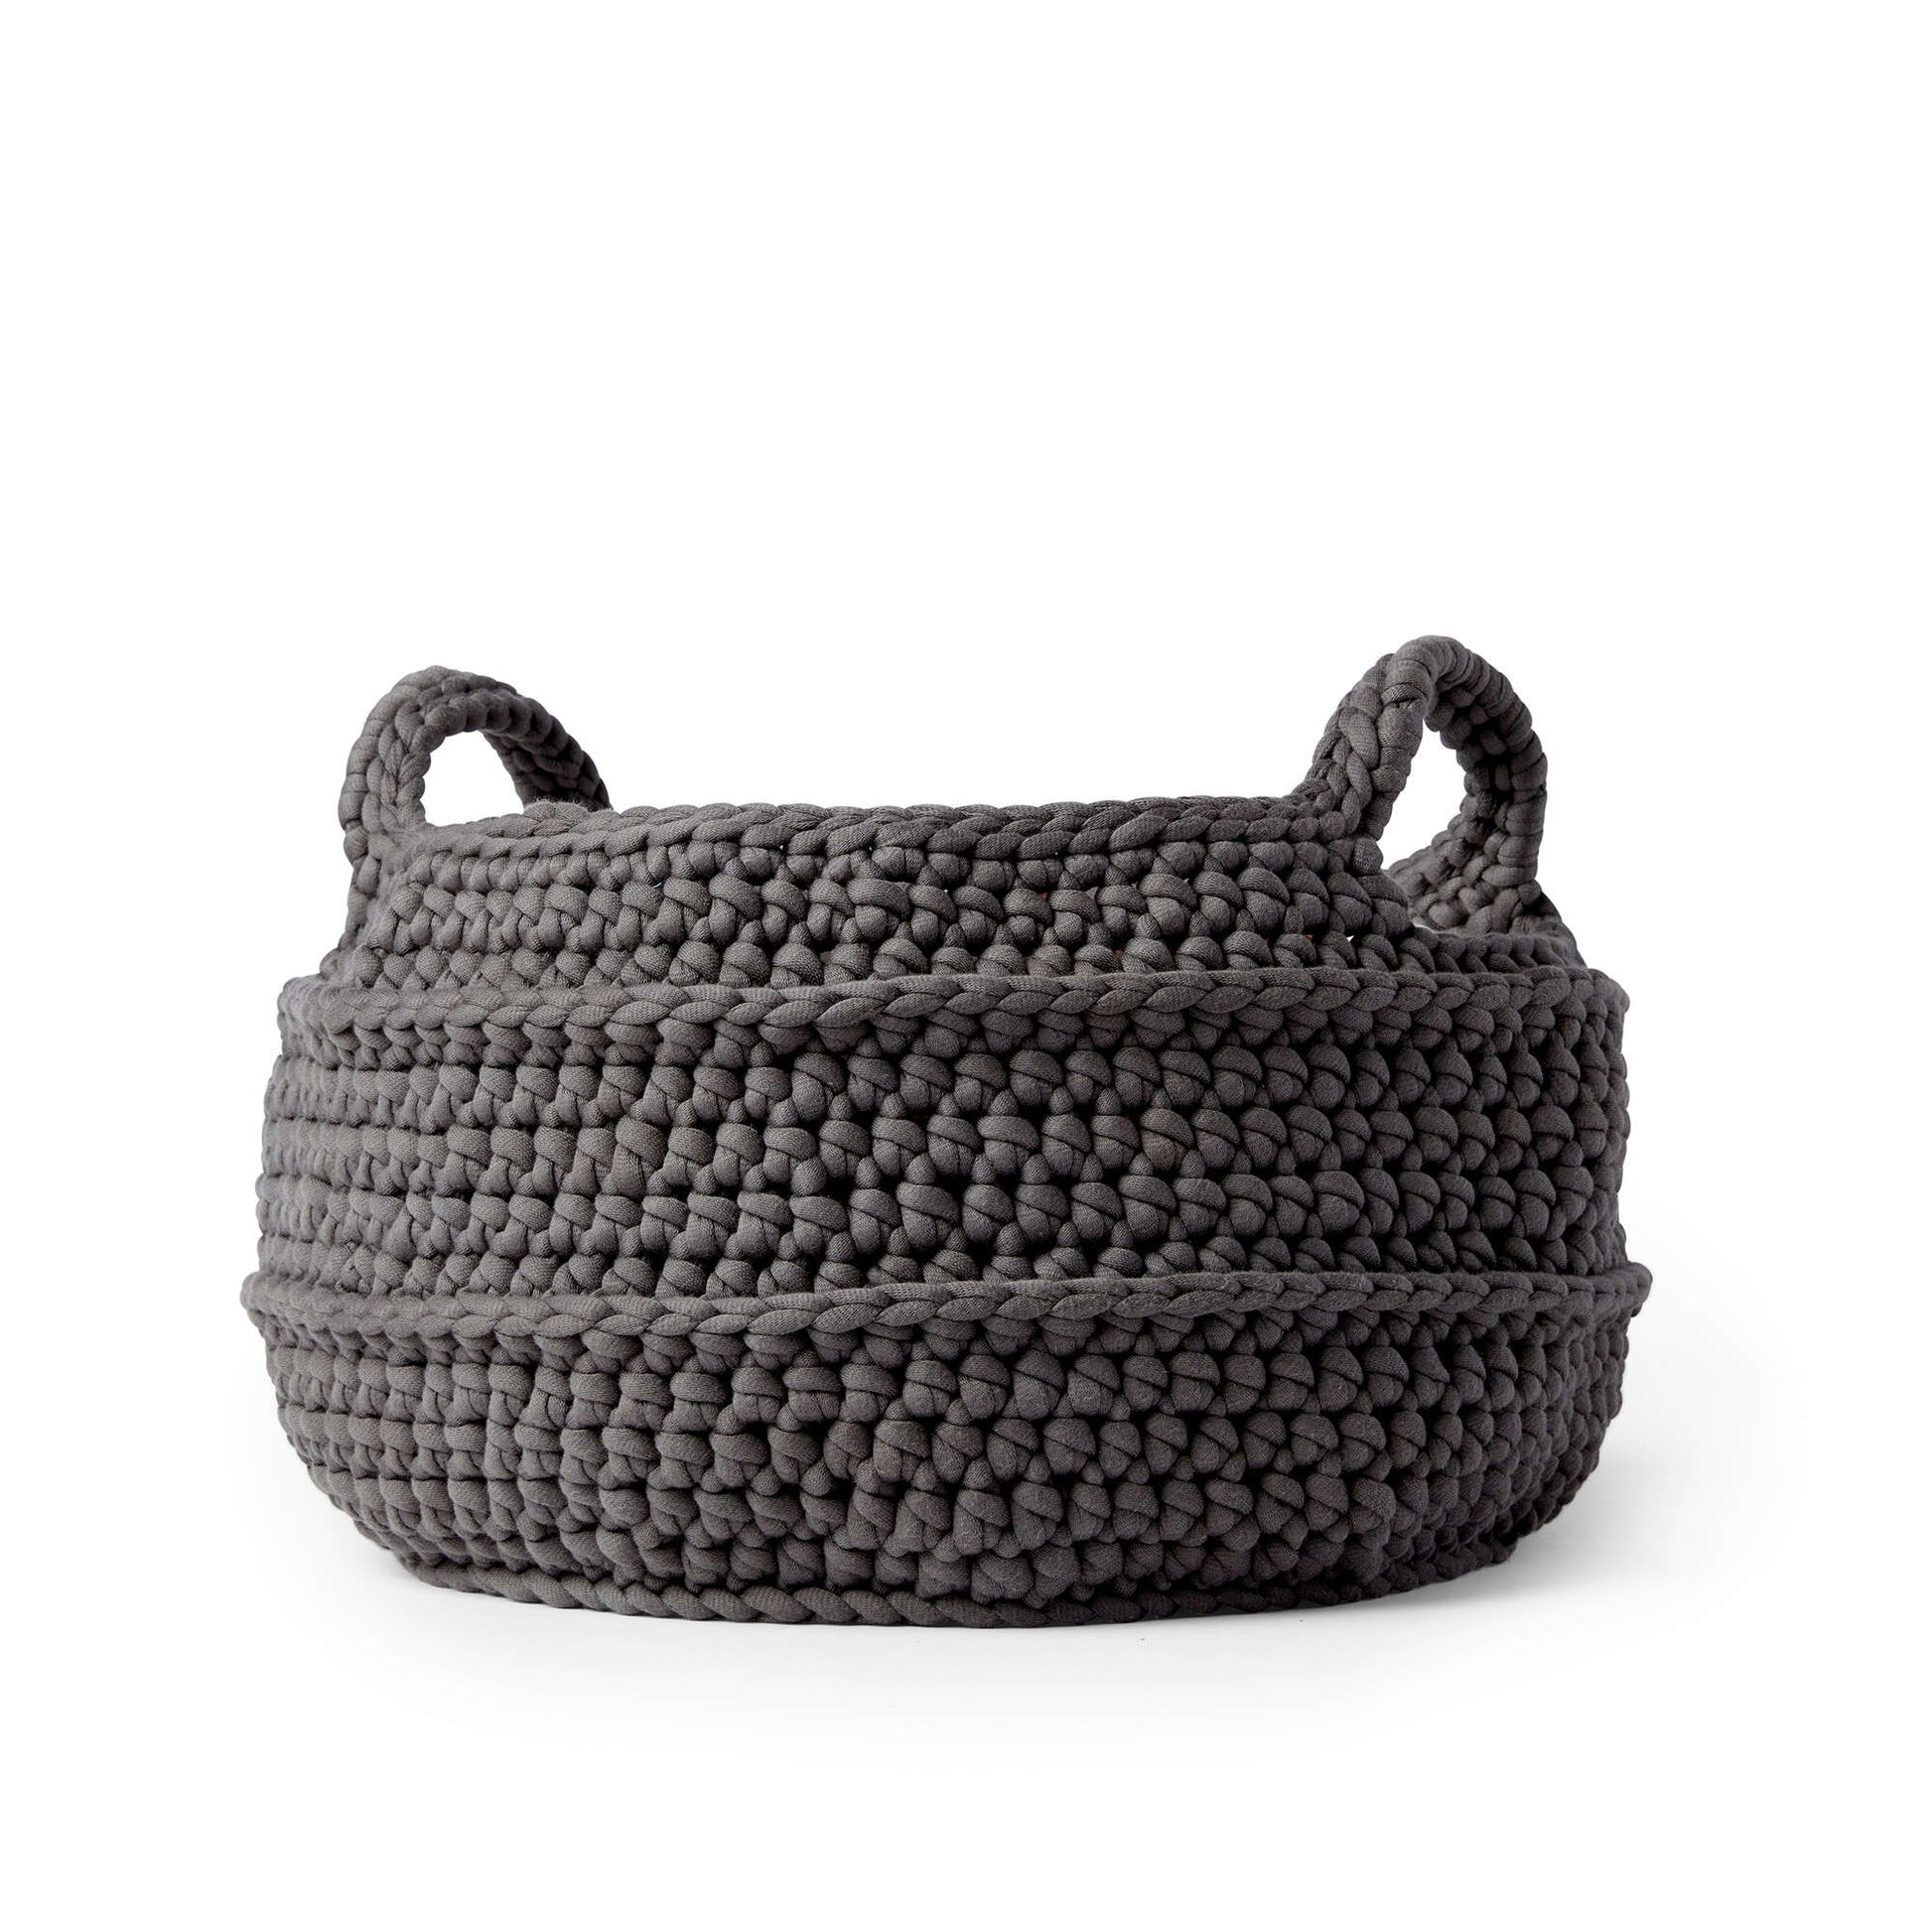 Free Bernat Crochet Basket With Handles Pattern